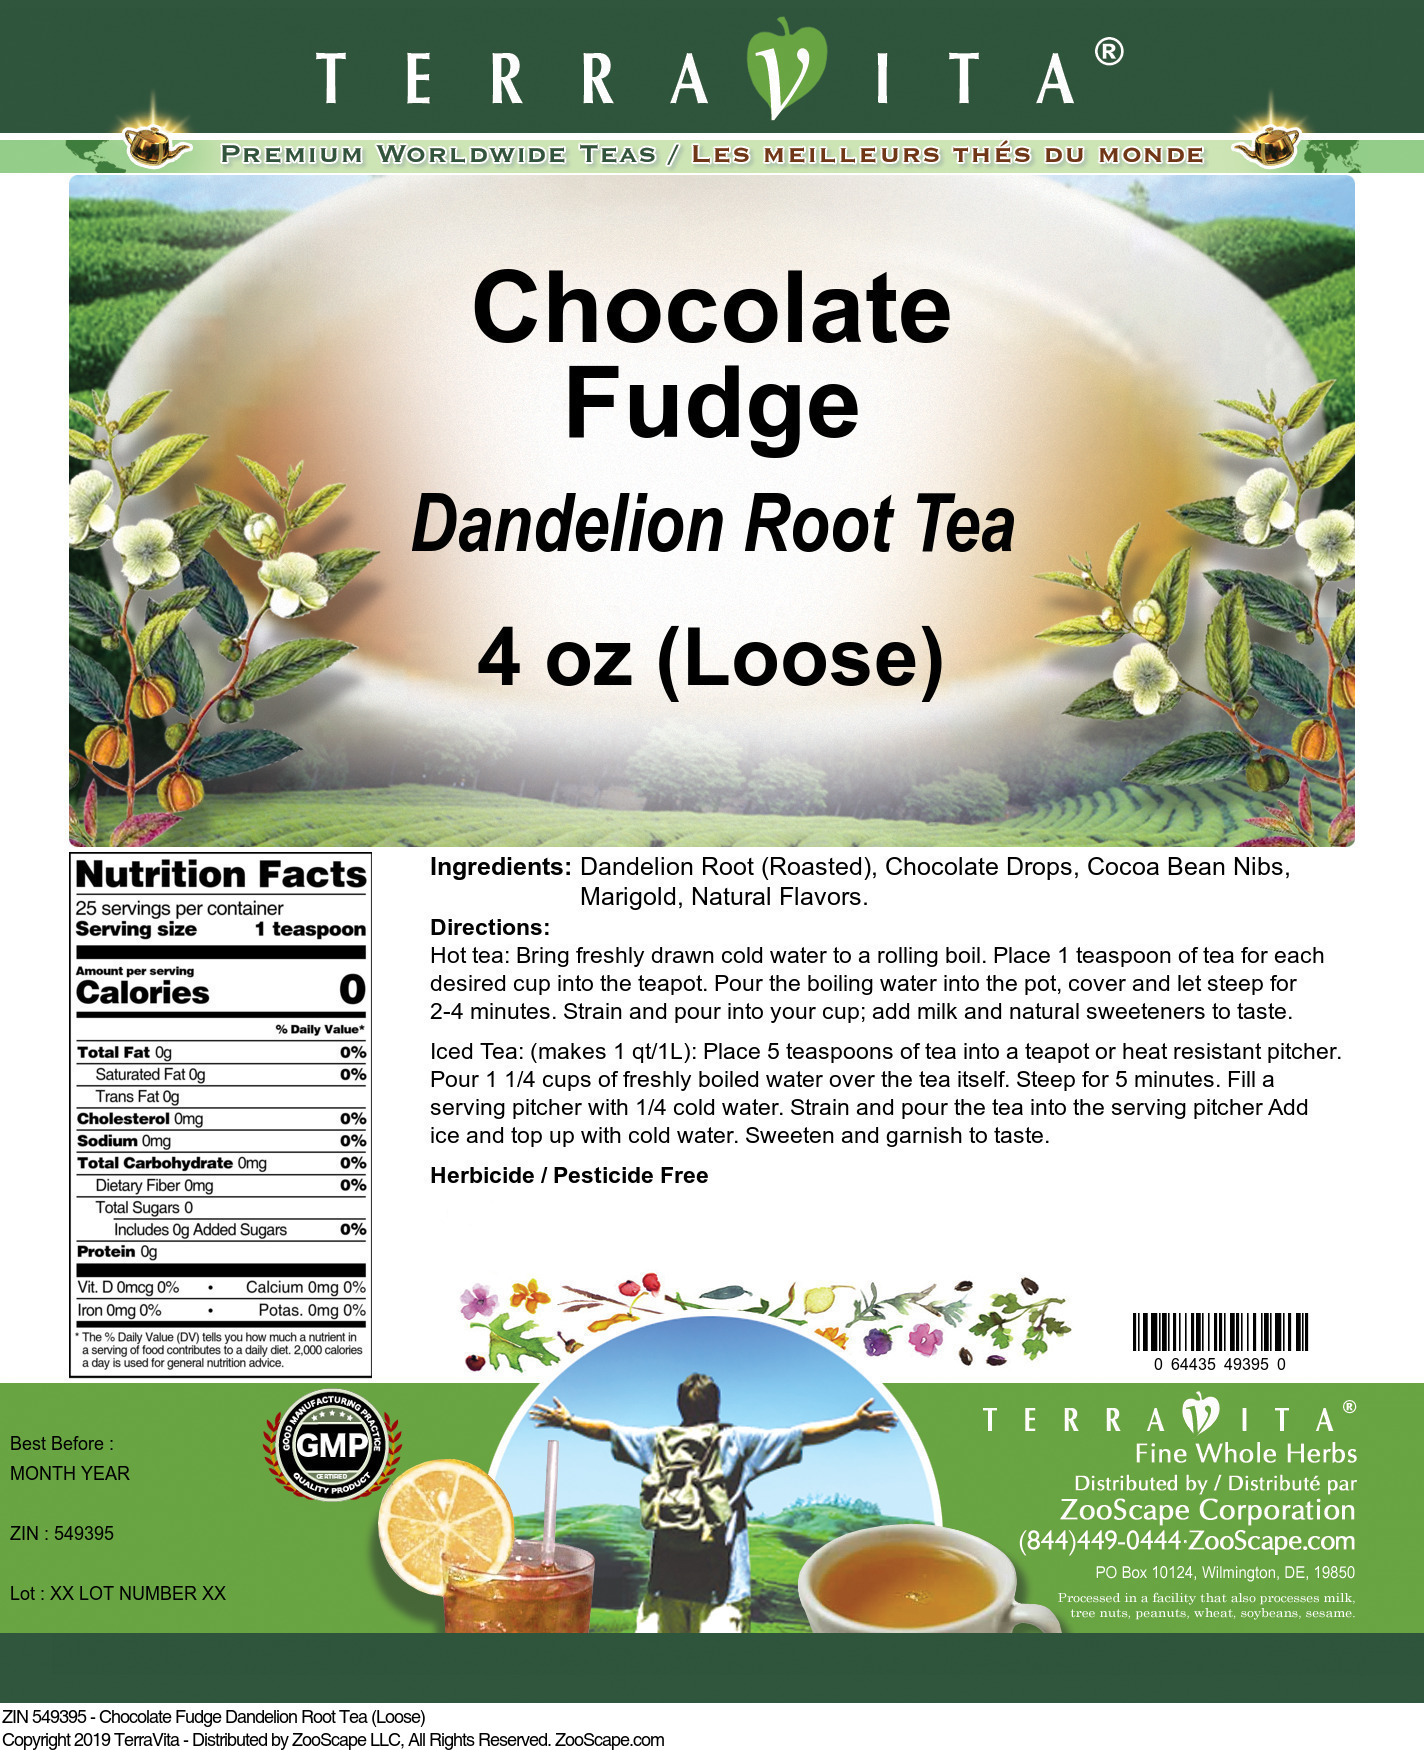 Chocolate Fudge Dandelion Root Tea (Loose) - Label